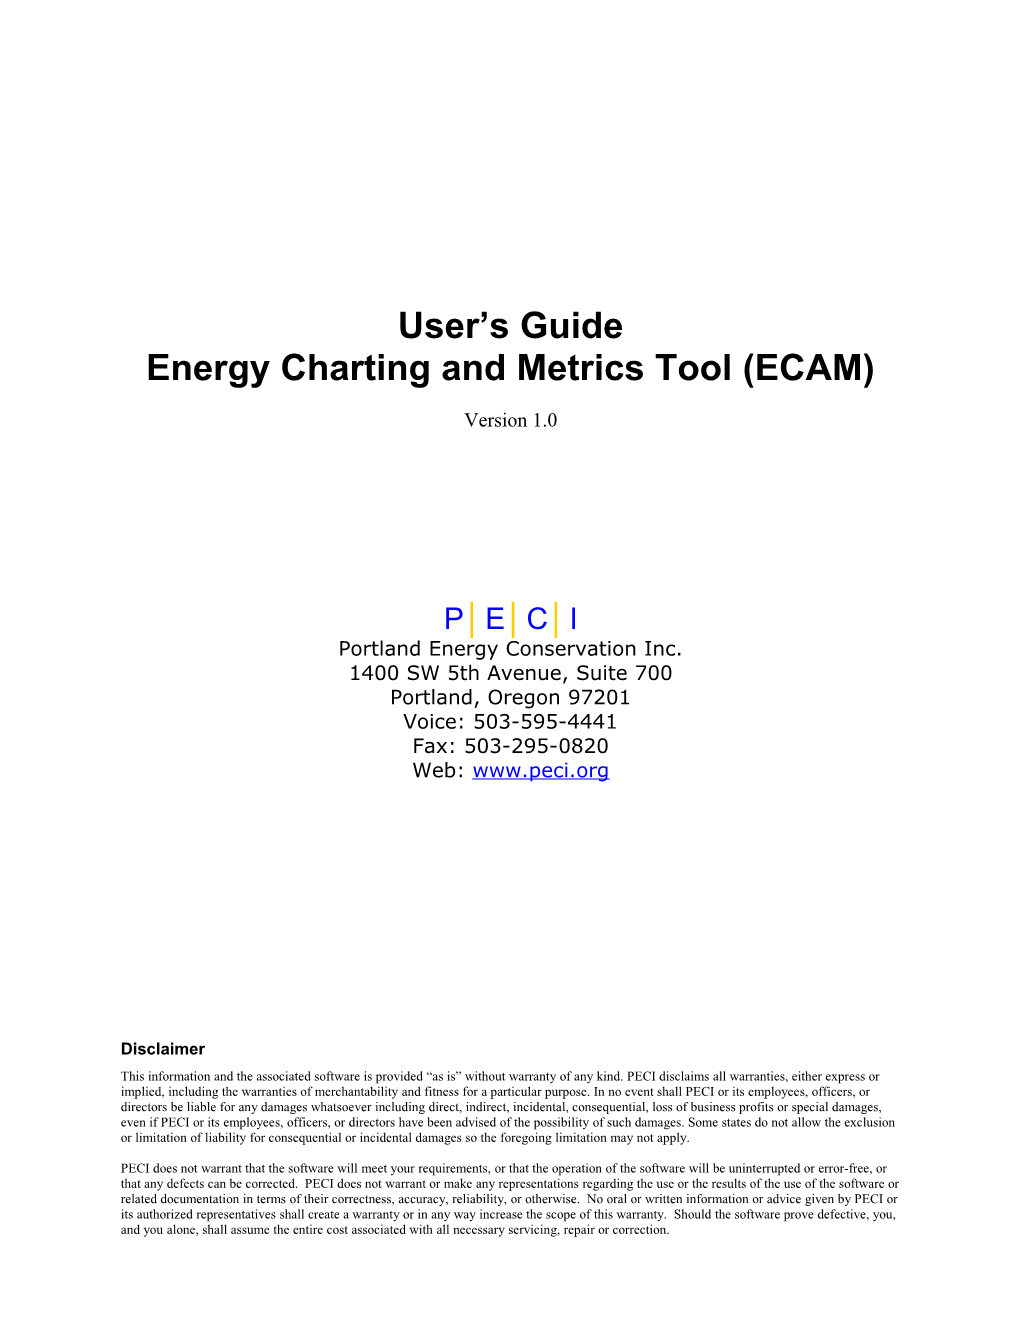 User S Guide Energy Charting and Metrics Tool (ECAM)